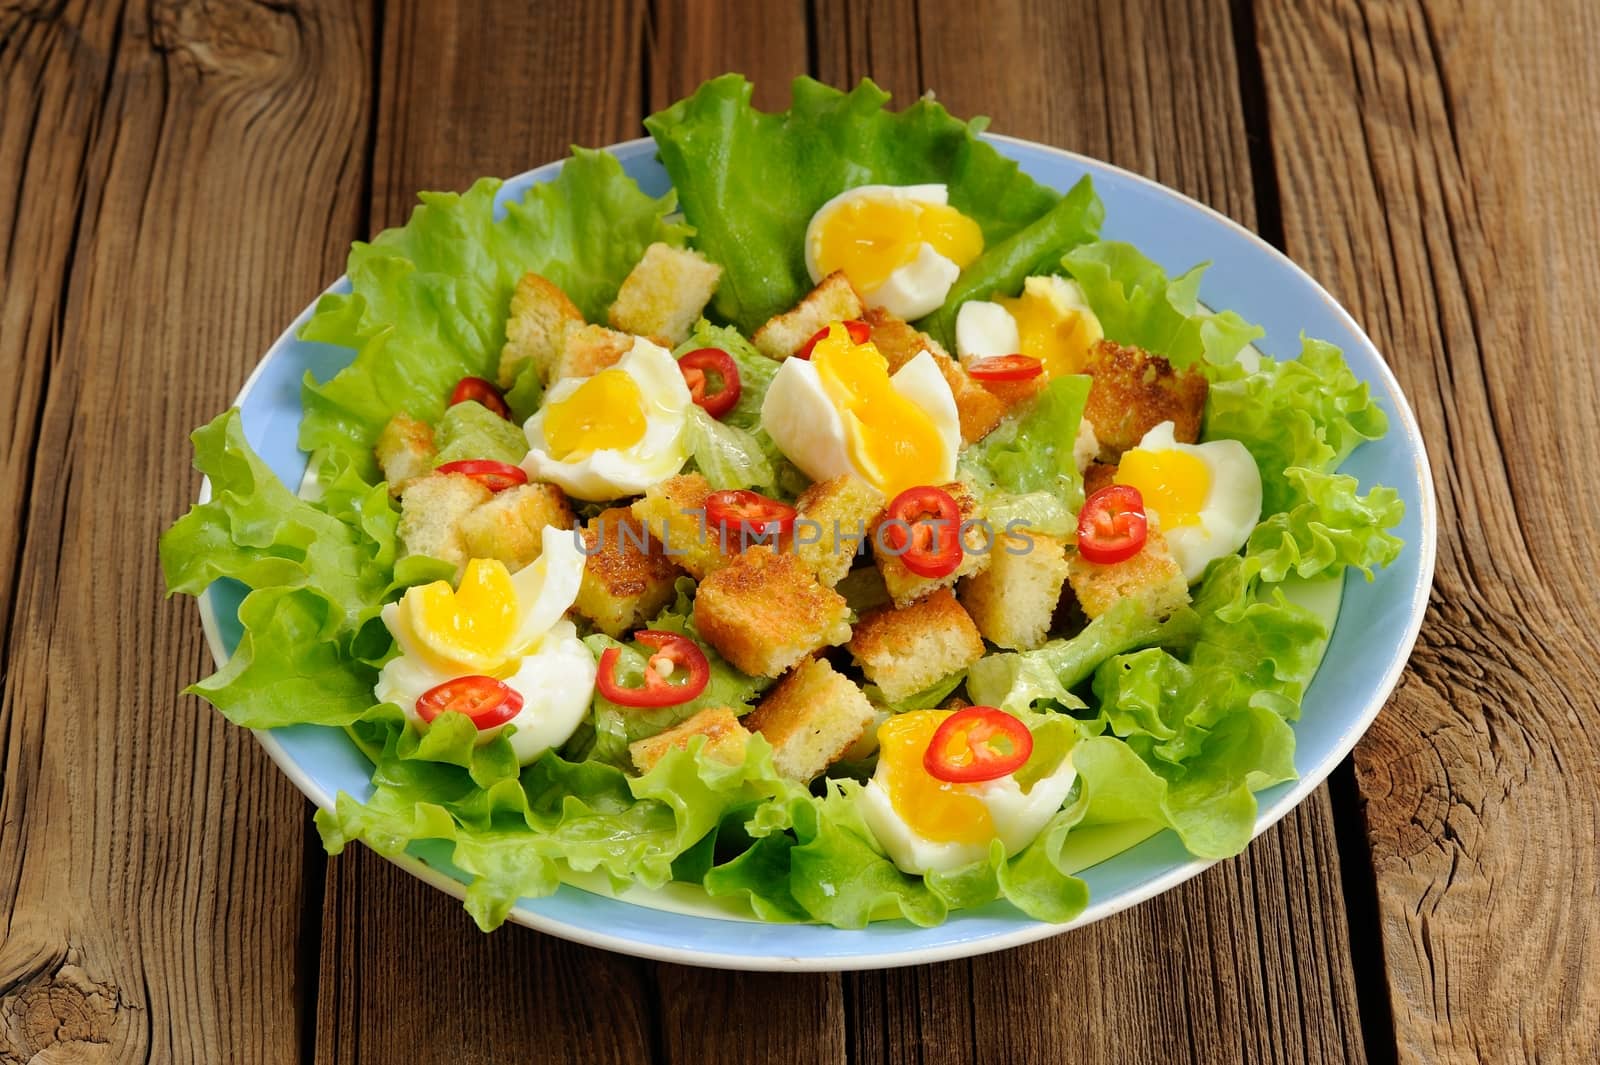 Salad Caesar with eggs, chili pepper closeup macro horizontal